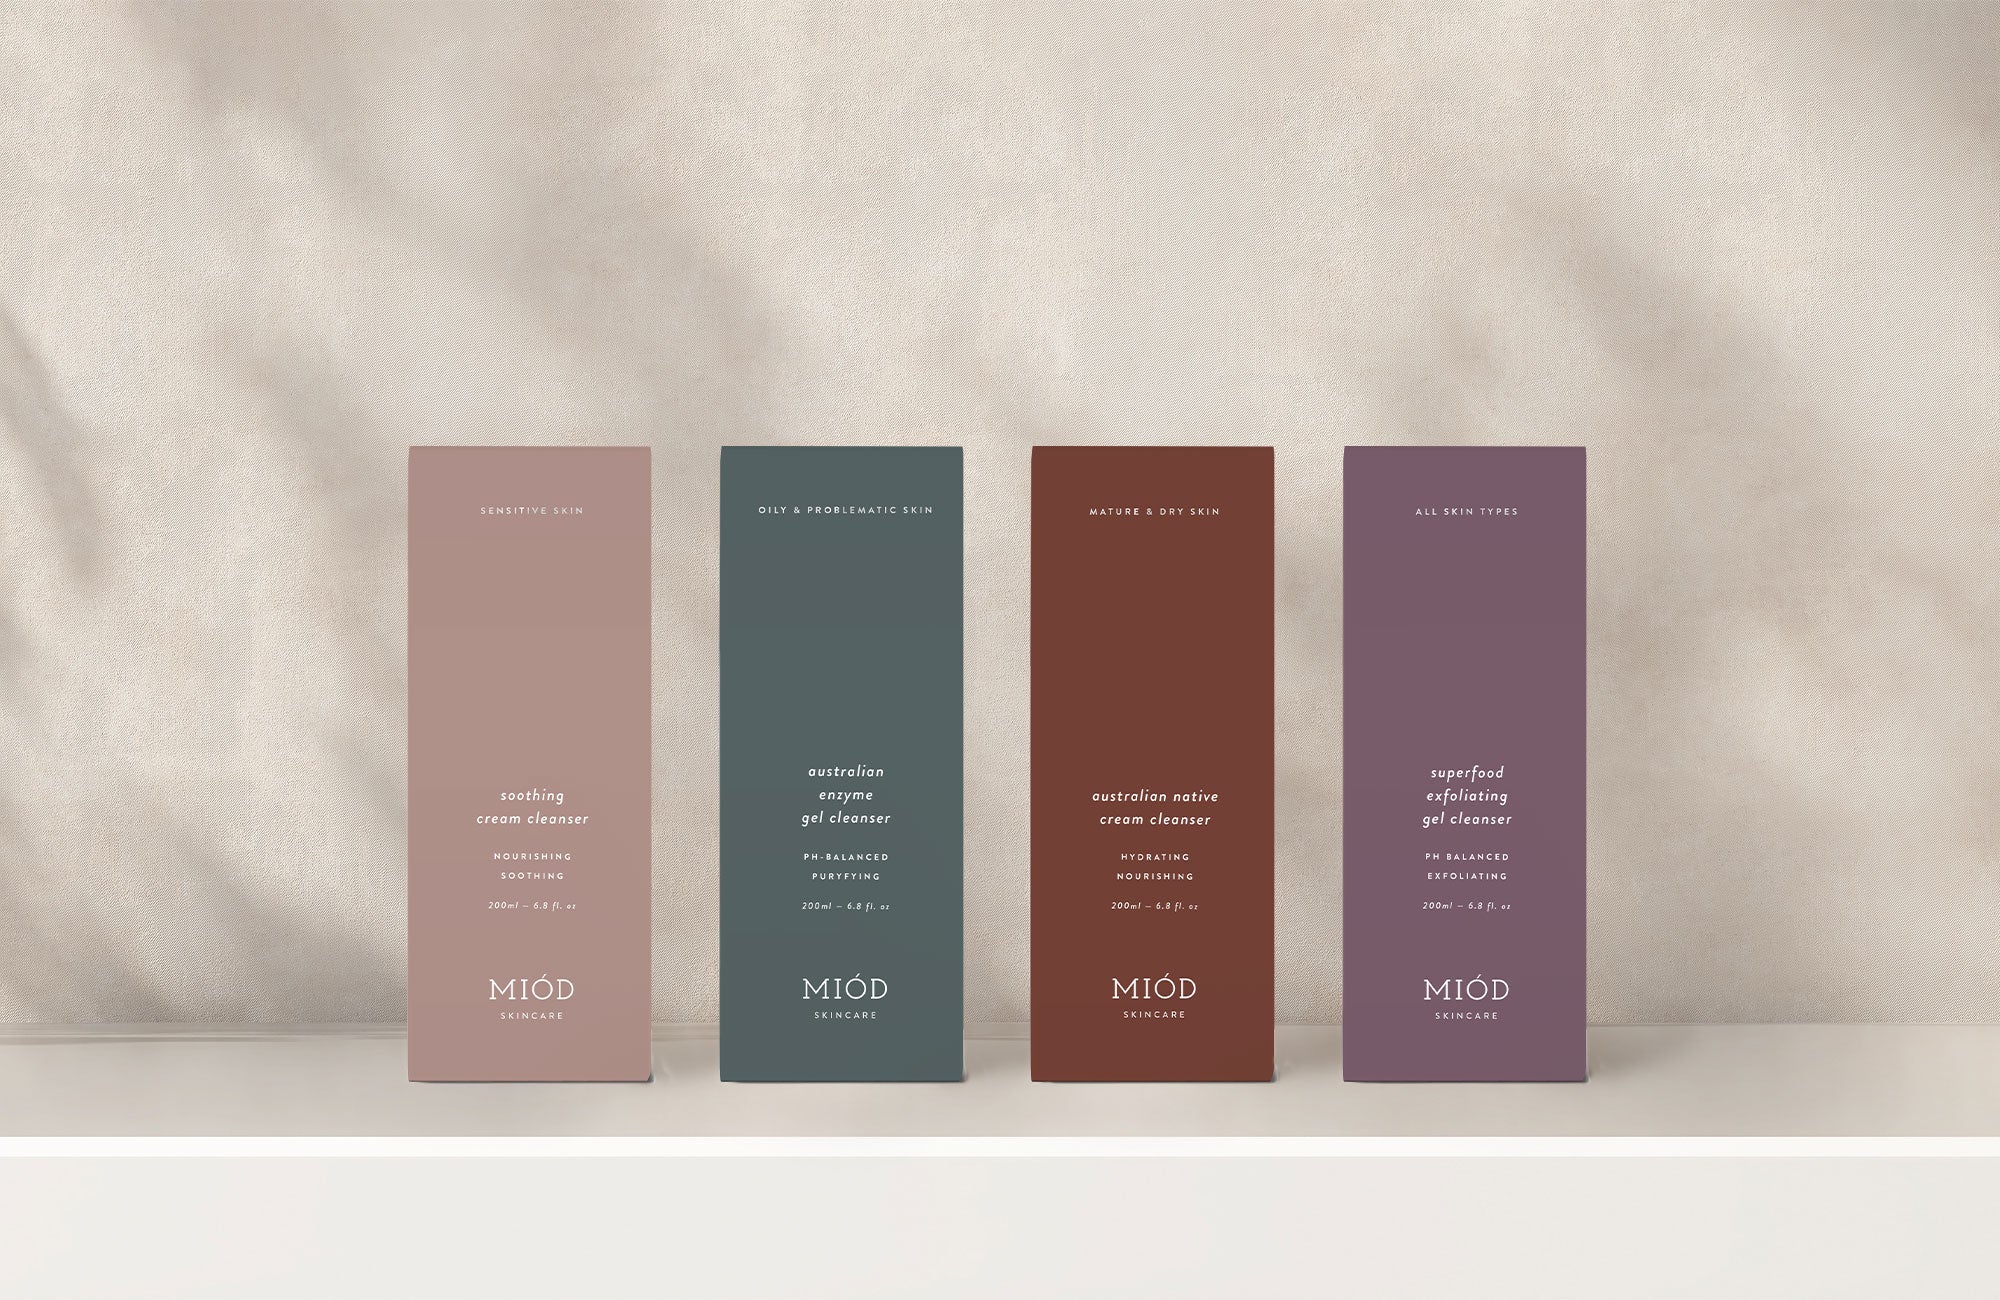 Karolina Król Studio minimalist sustainable packaging design for Miód Skincare cleanser range